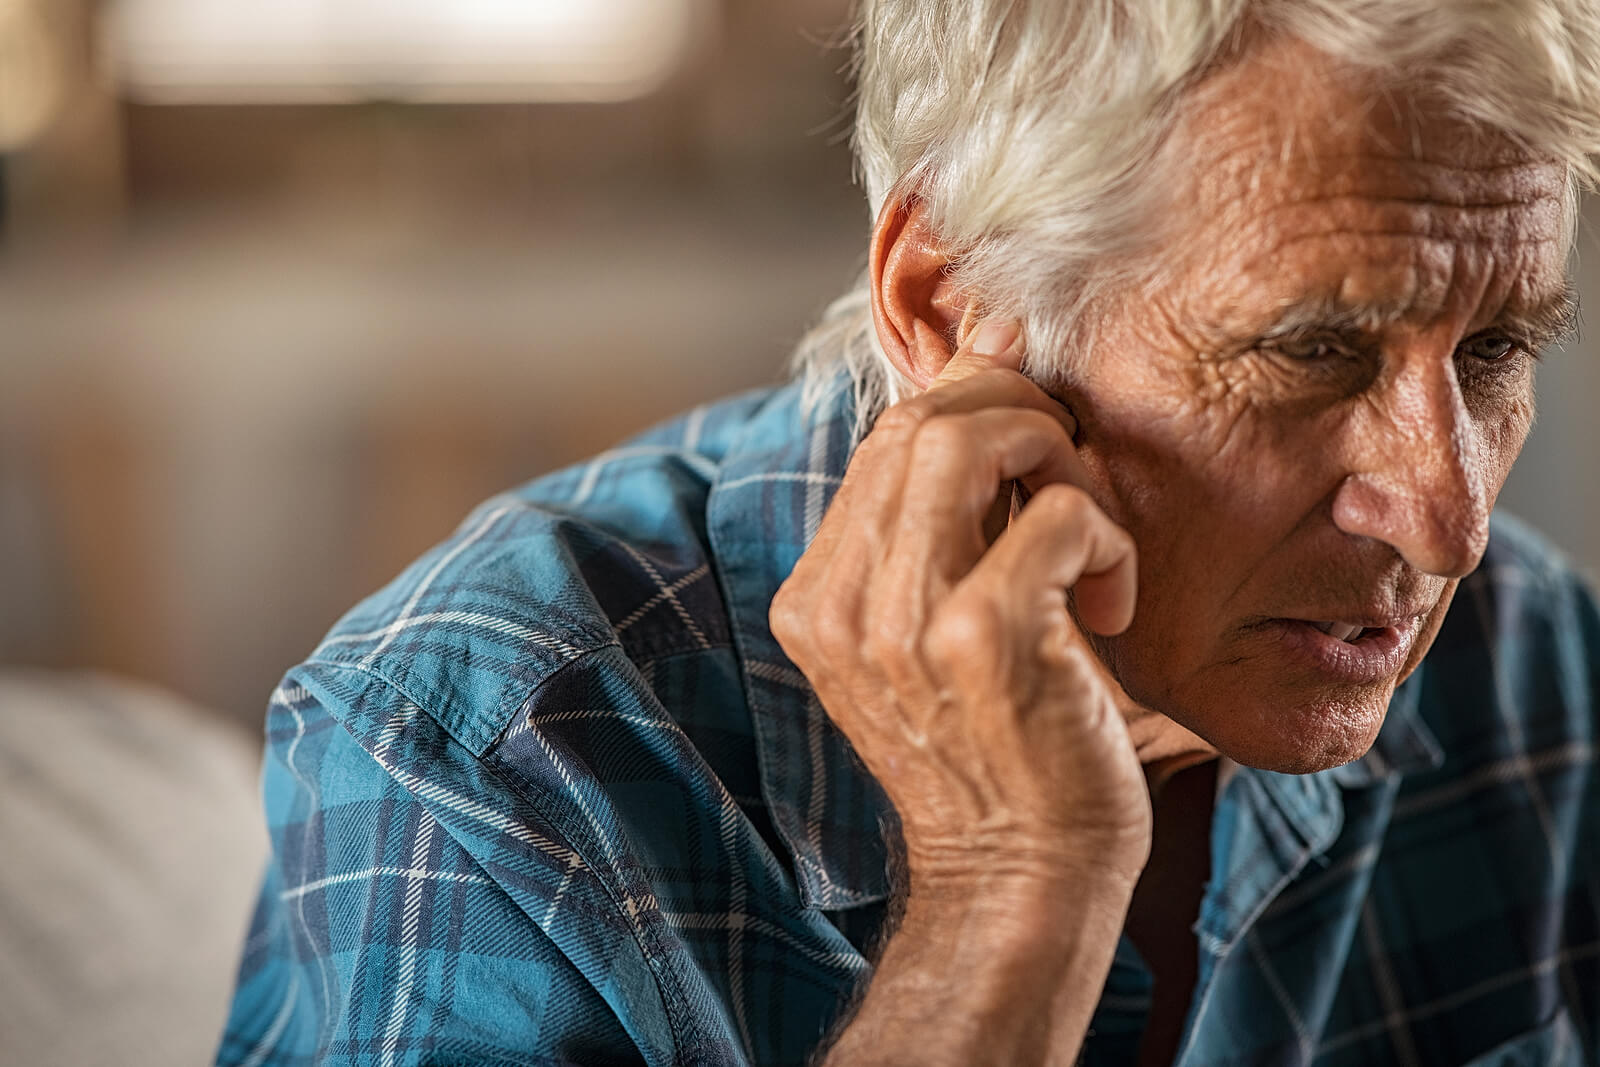 Risk Factors for Hearing Loss